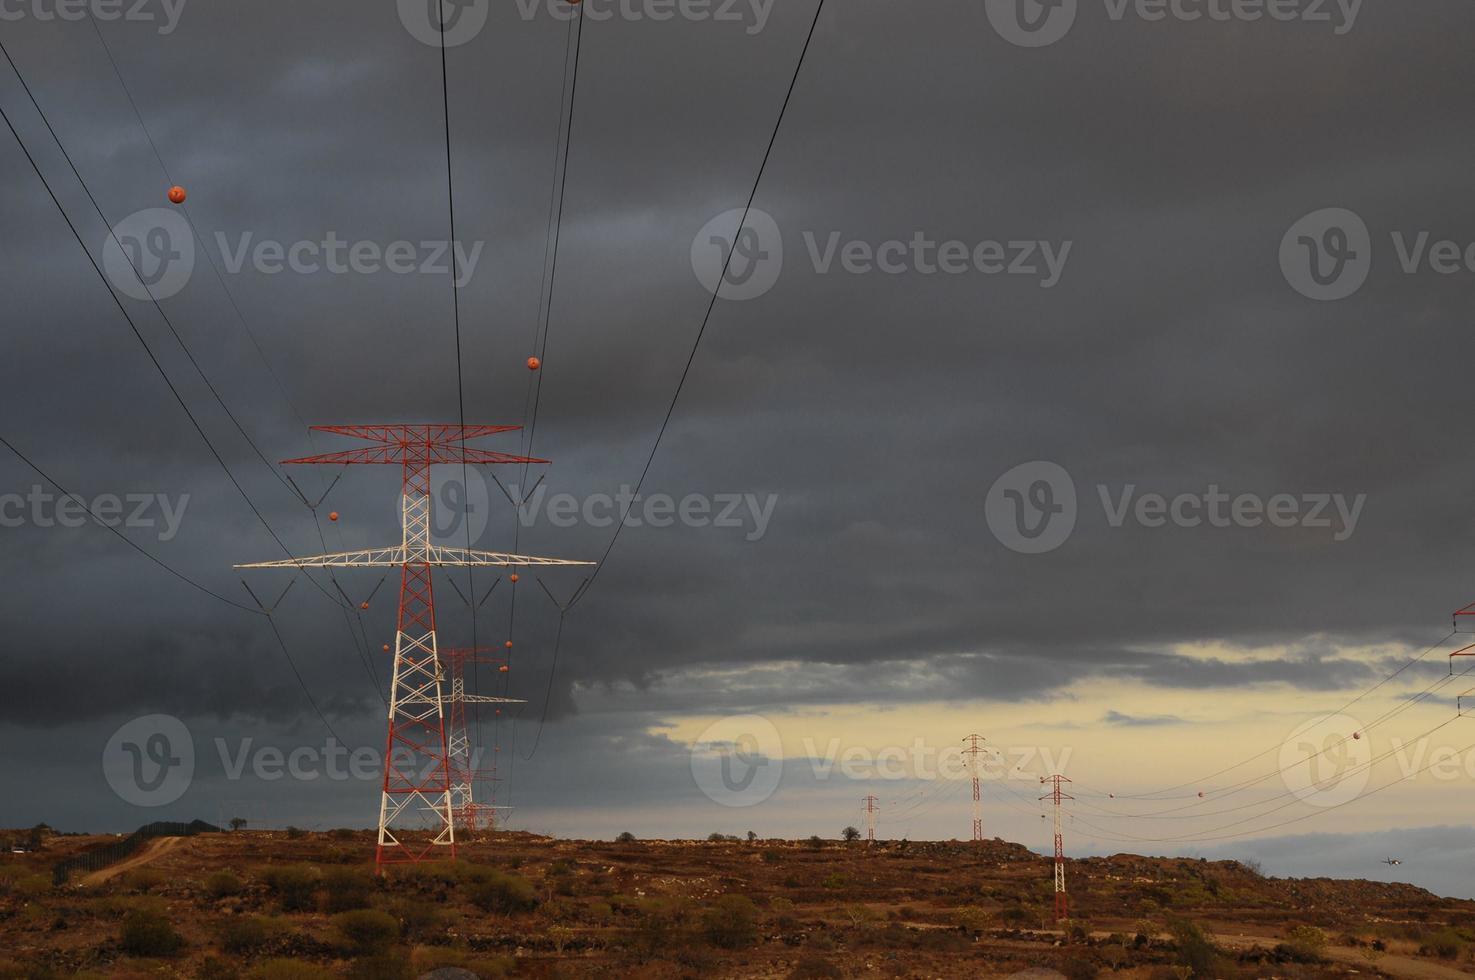 Electric pole view photo